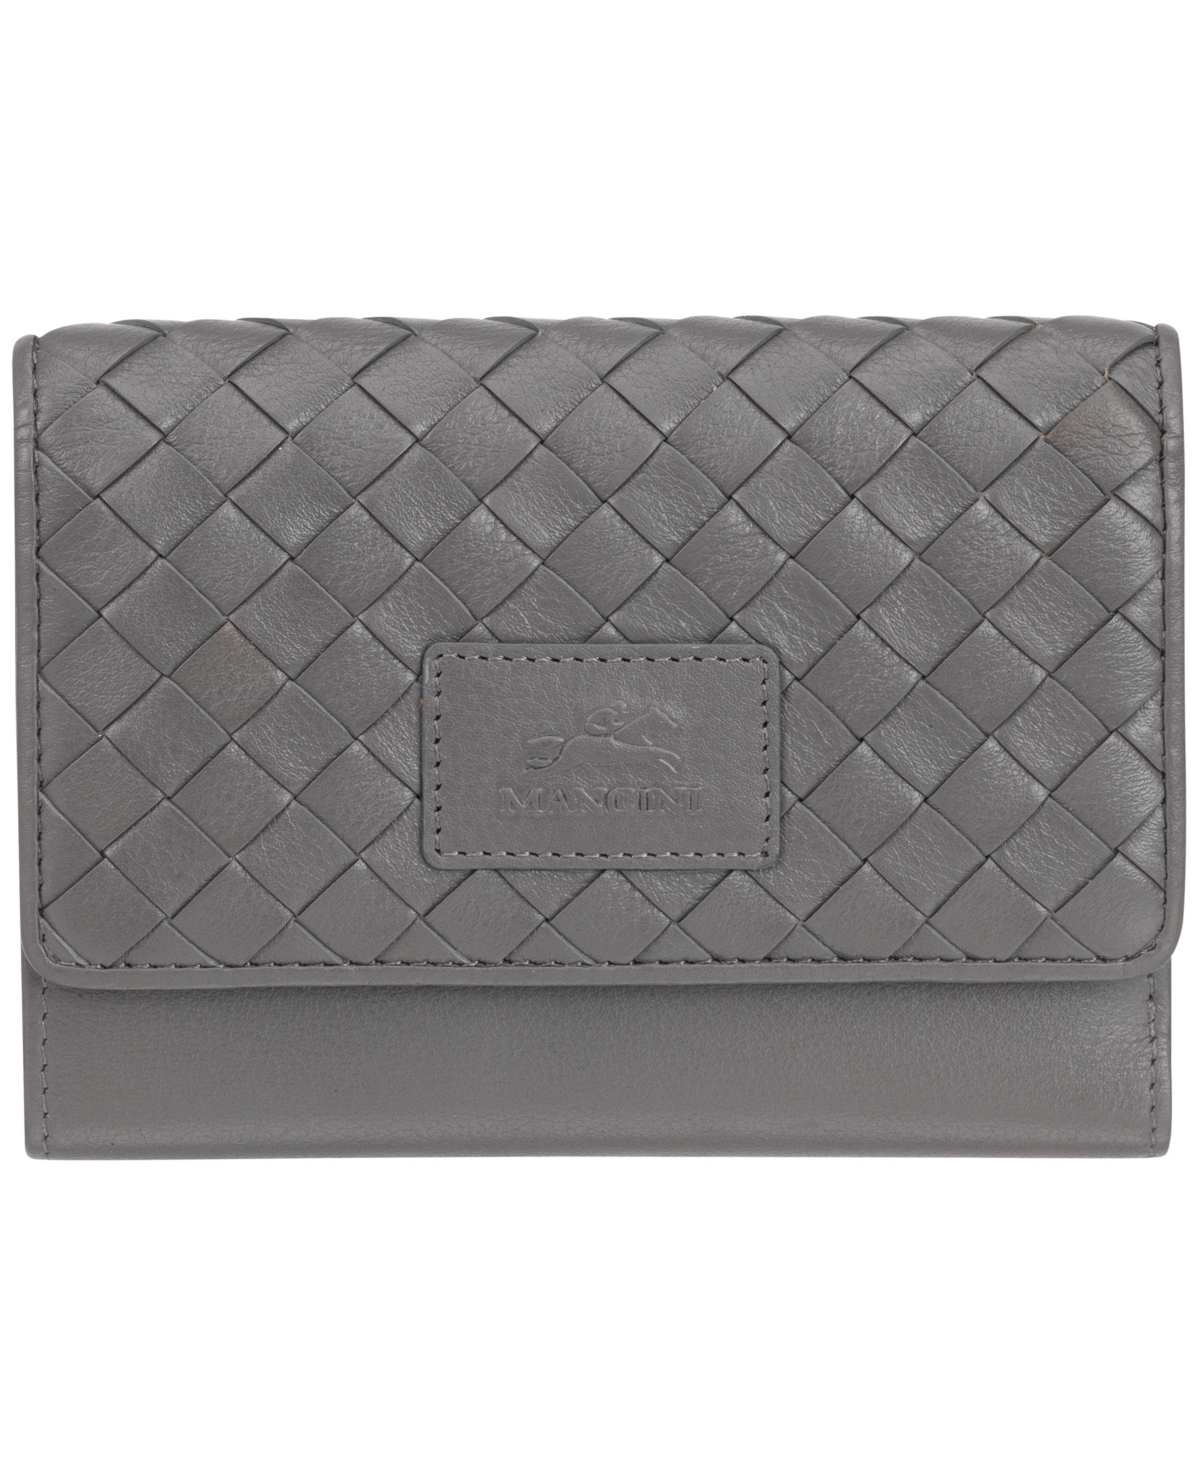 Women's Basket Weave Collection Rfid Secure Mini Clutch Wallet - Gray